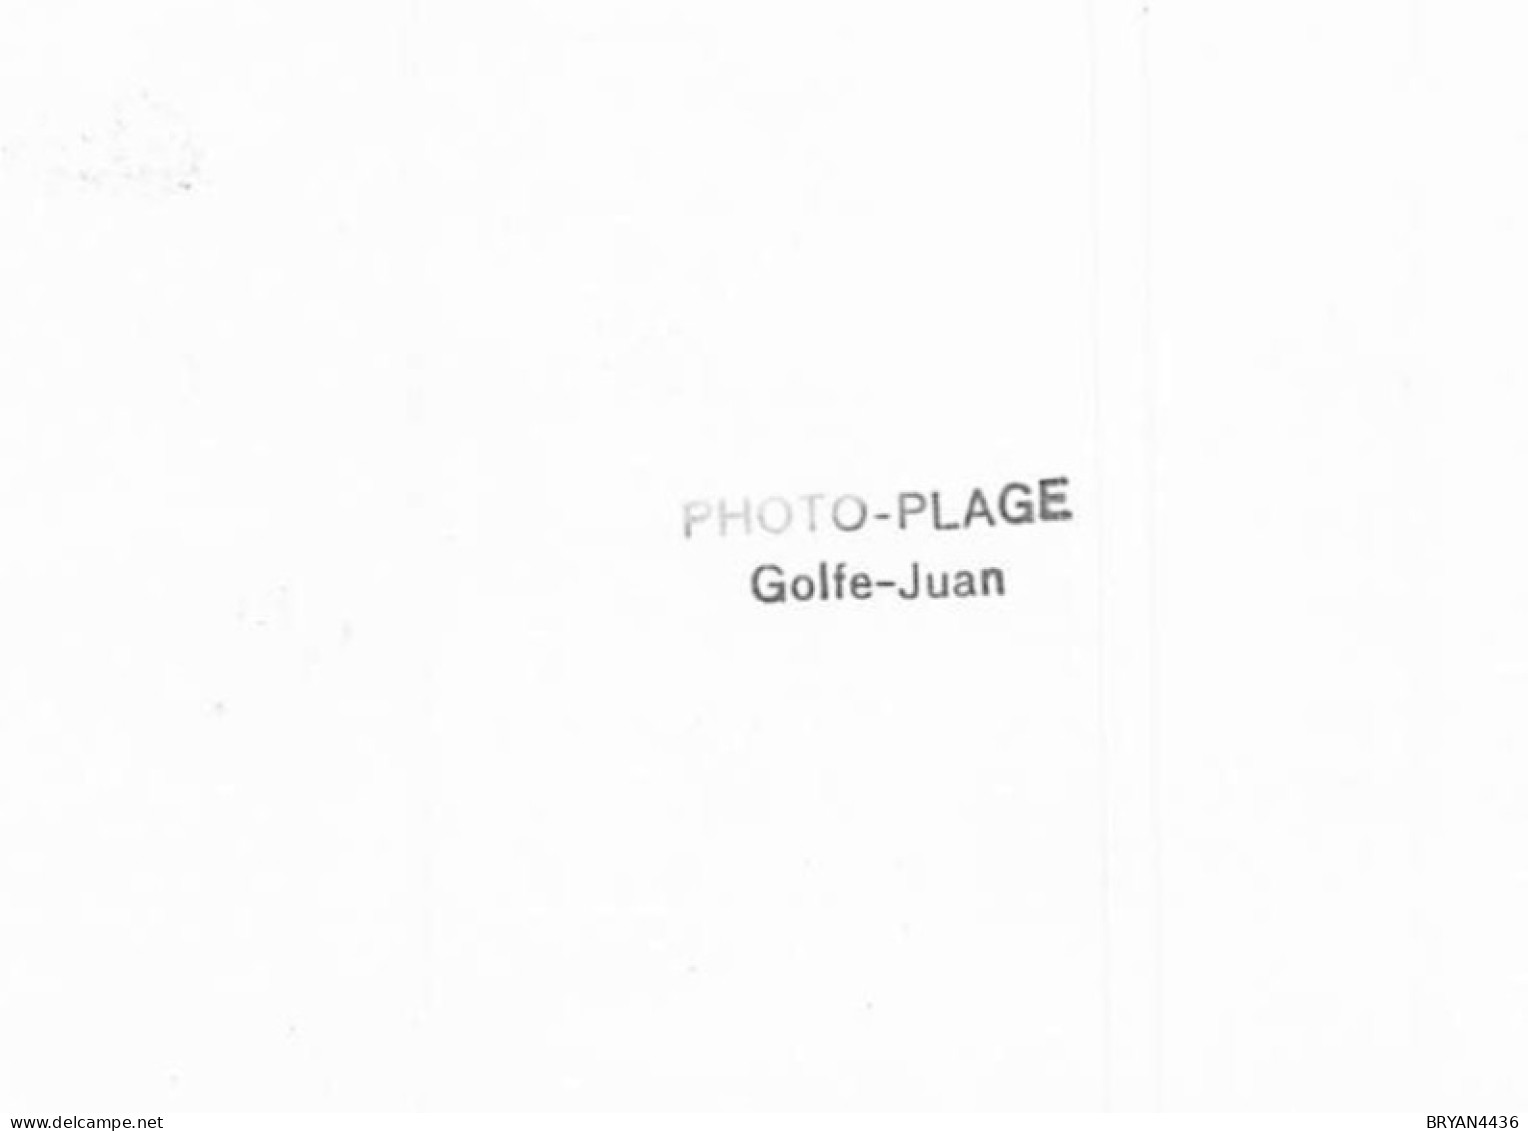 AIMABLE - ACCORDEONISTE - ACCORDEON - PHOTO   (13x18cm) - PHOTO PLAGE GOLFE JUAN -TRES BON ETAT - Berühmtheiten